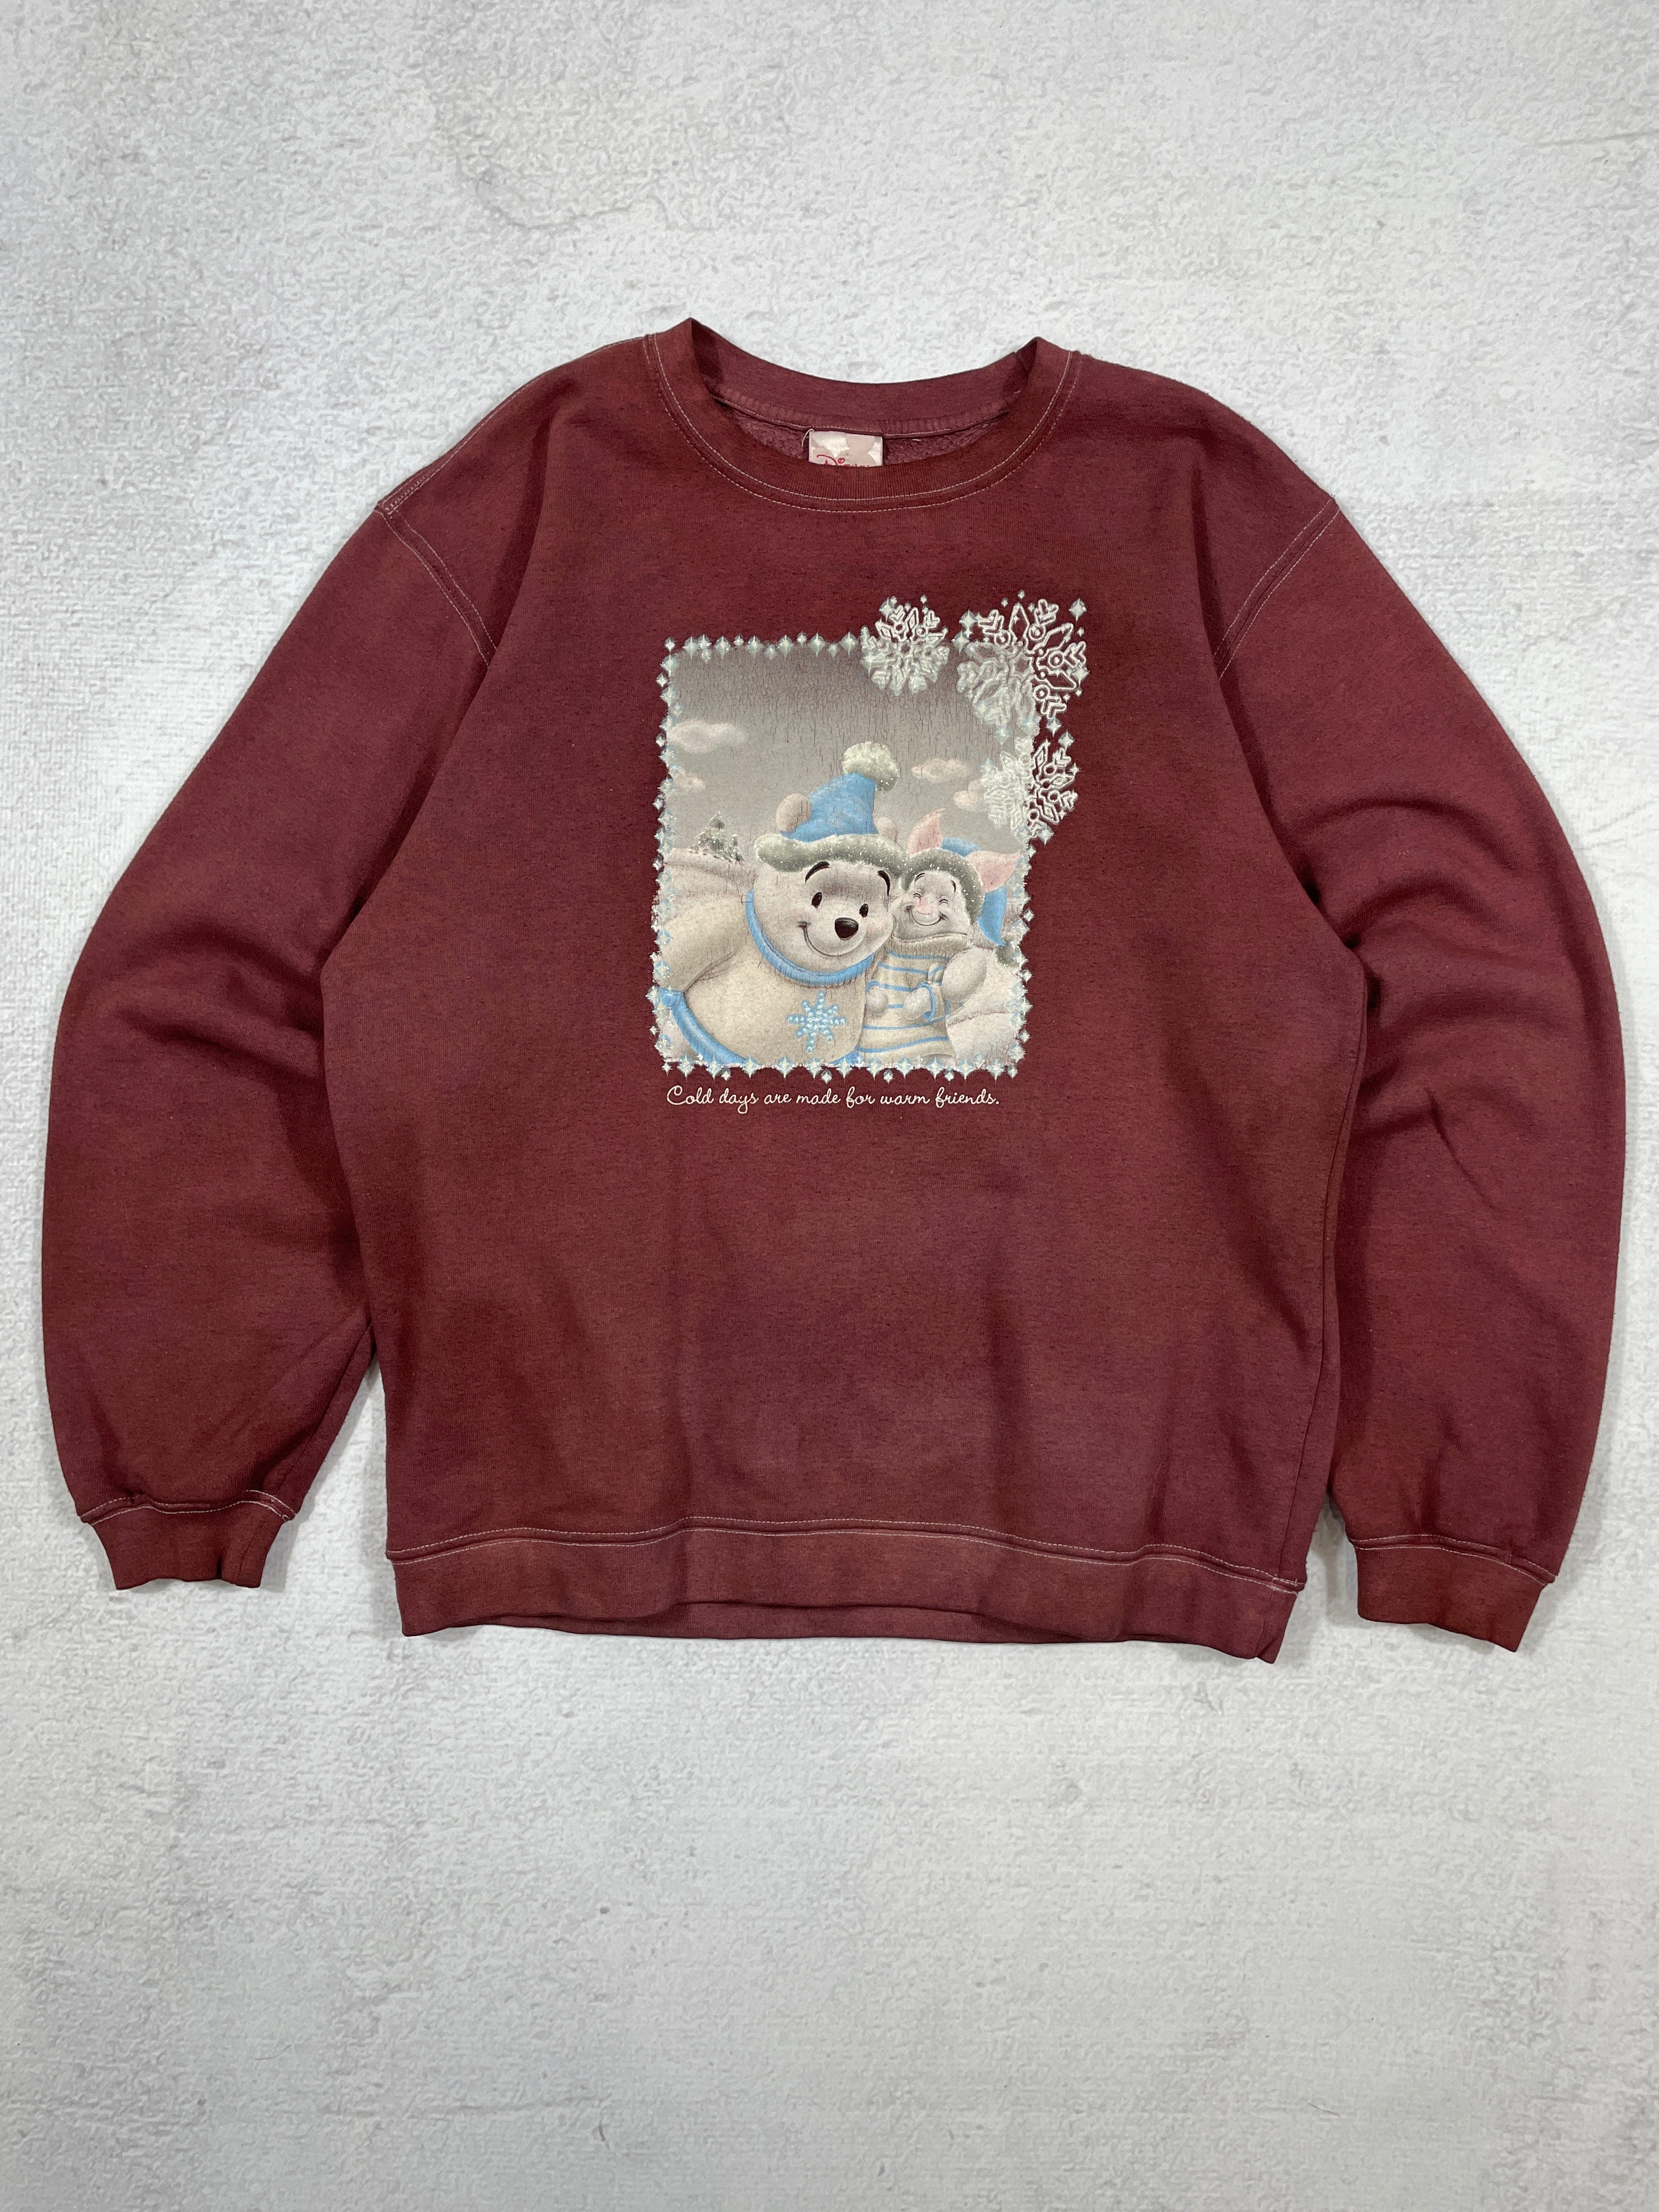 Vintage Dyed Disney Graphic Crewneck Sweatshirt - Men's Medium